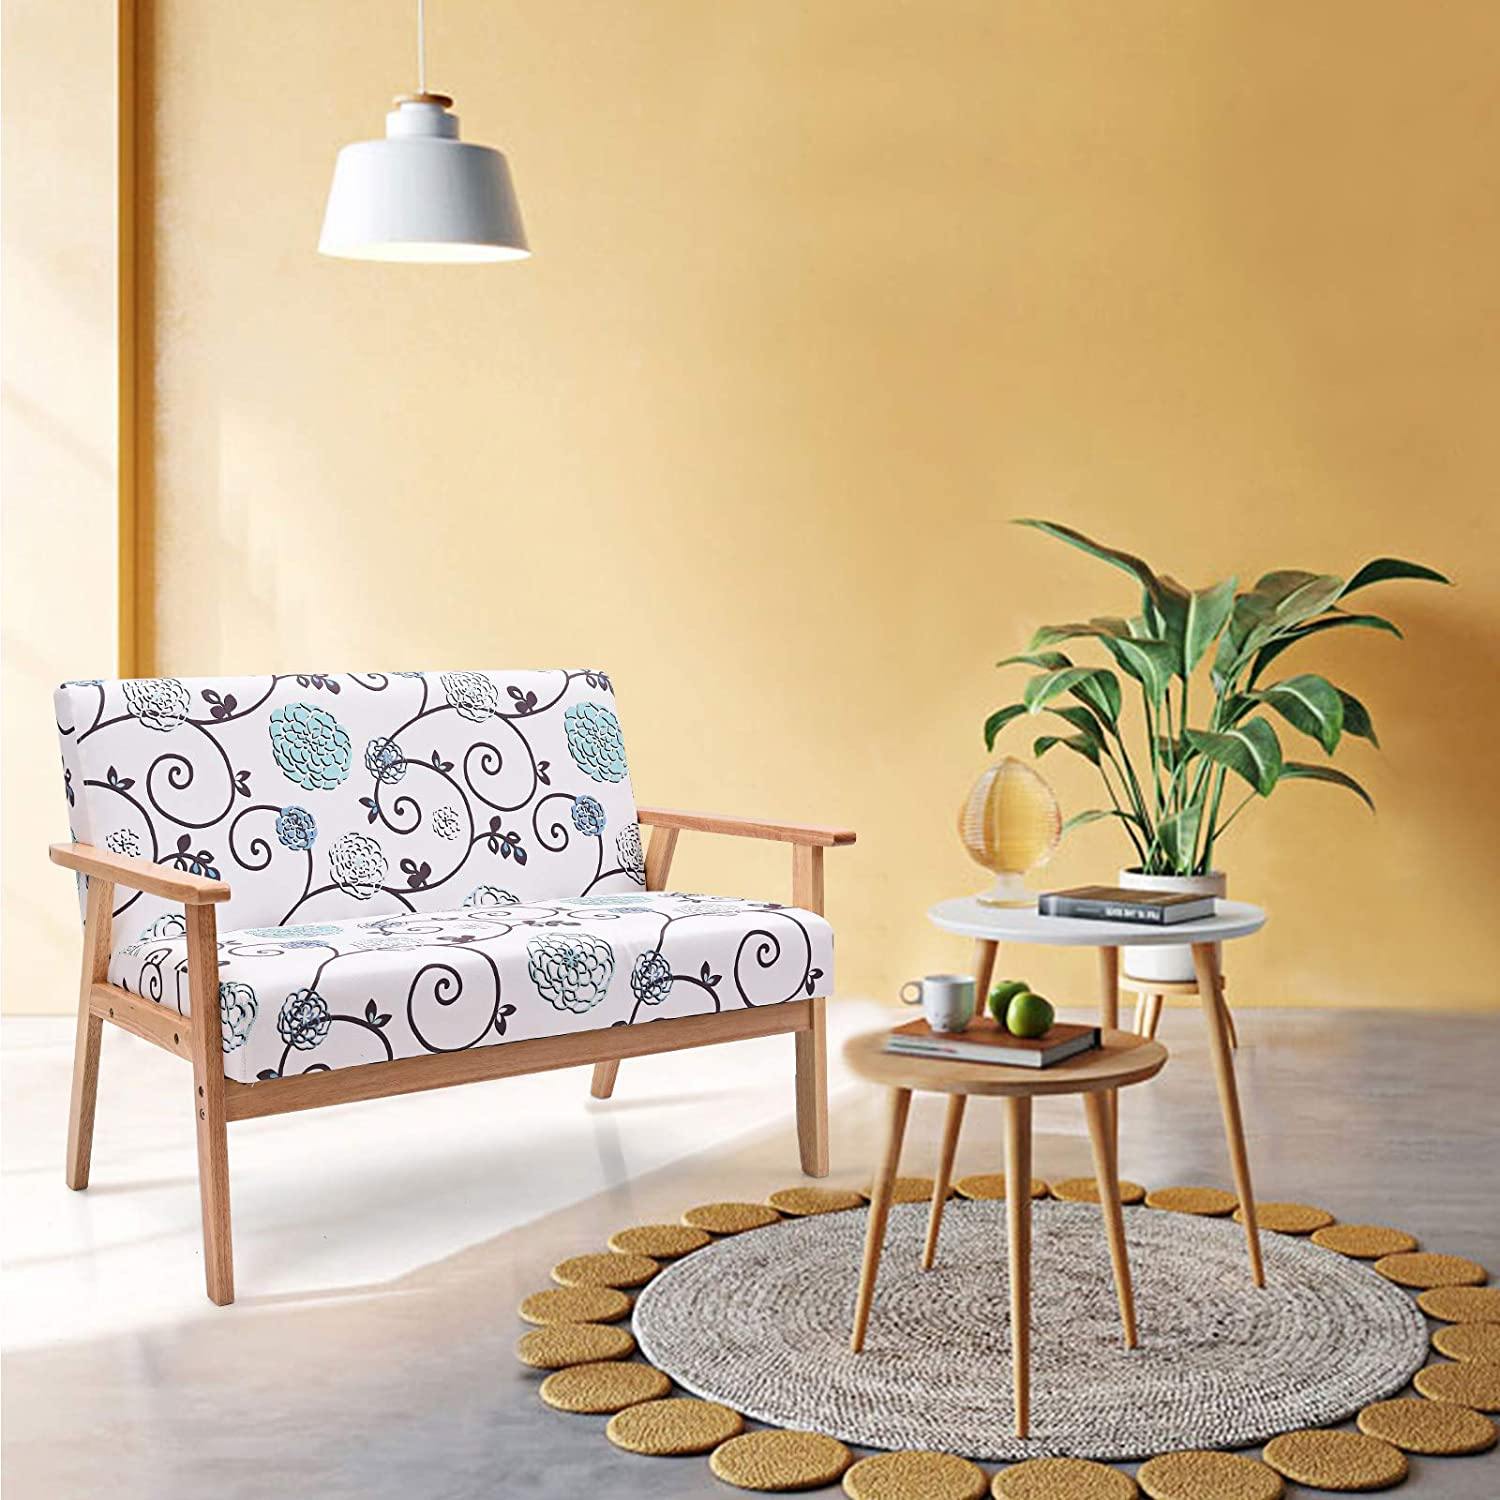 Giantex Mid-Century Wooden Loveseat, Upholstered Wooden Lounge Accent Chair - Giantexus